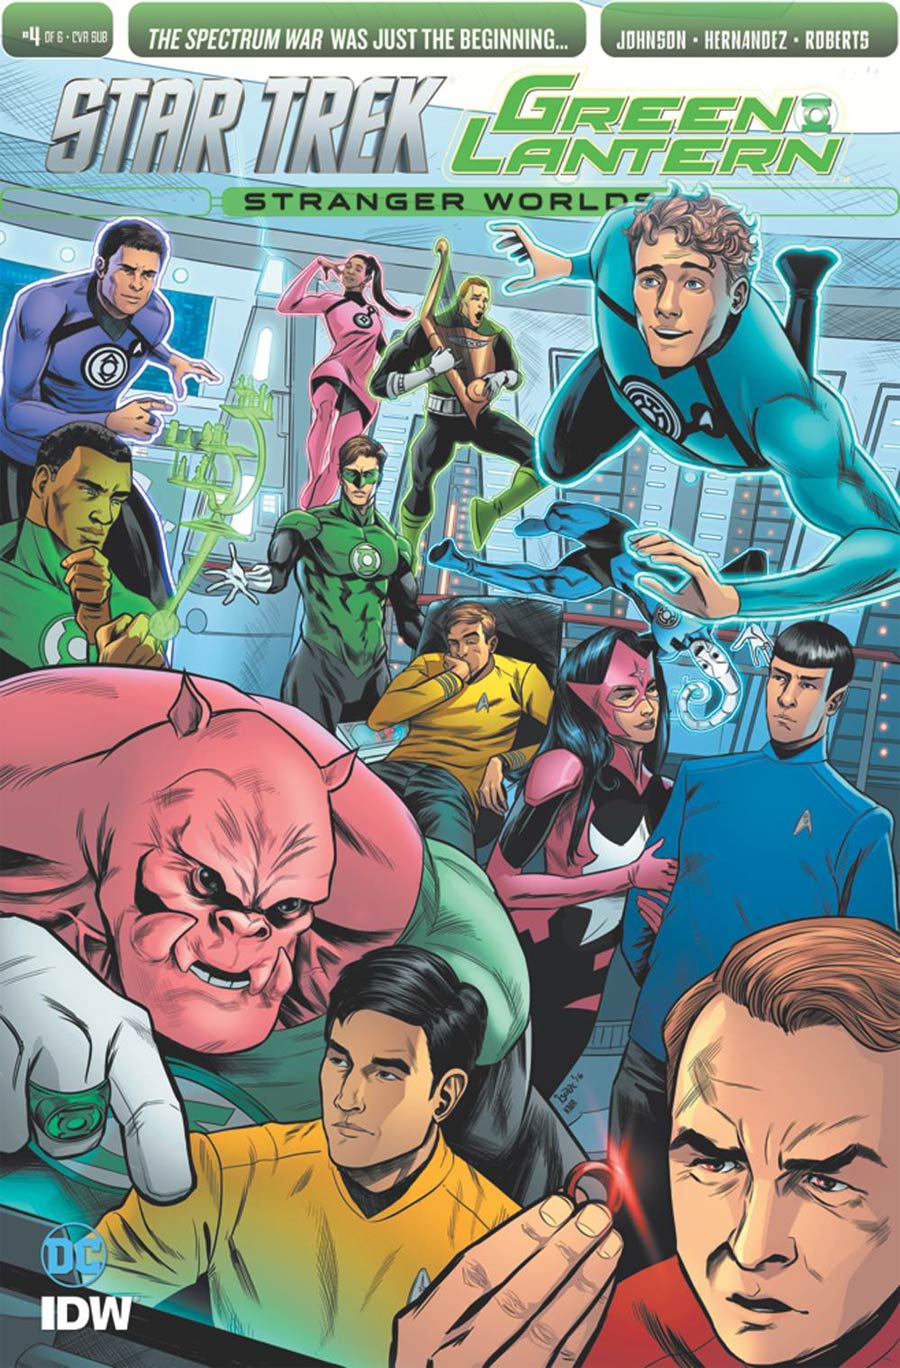 Star Trek Green Lantern Vol 2 Stranger Worlds #4 Cover B Variant Isaac Goodheart Subscription Cover